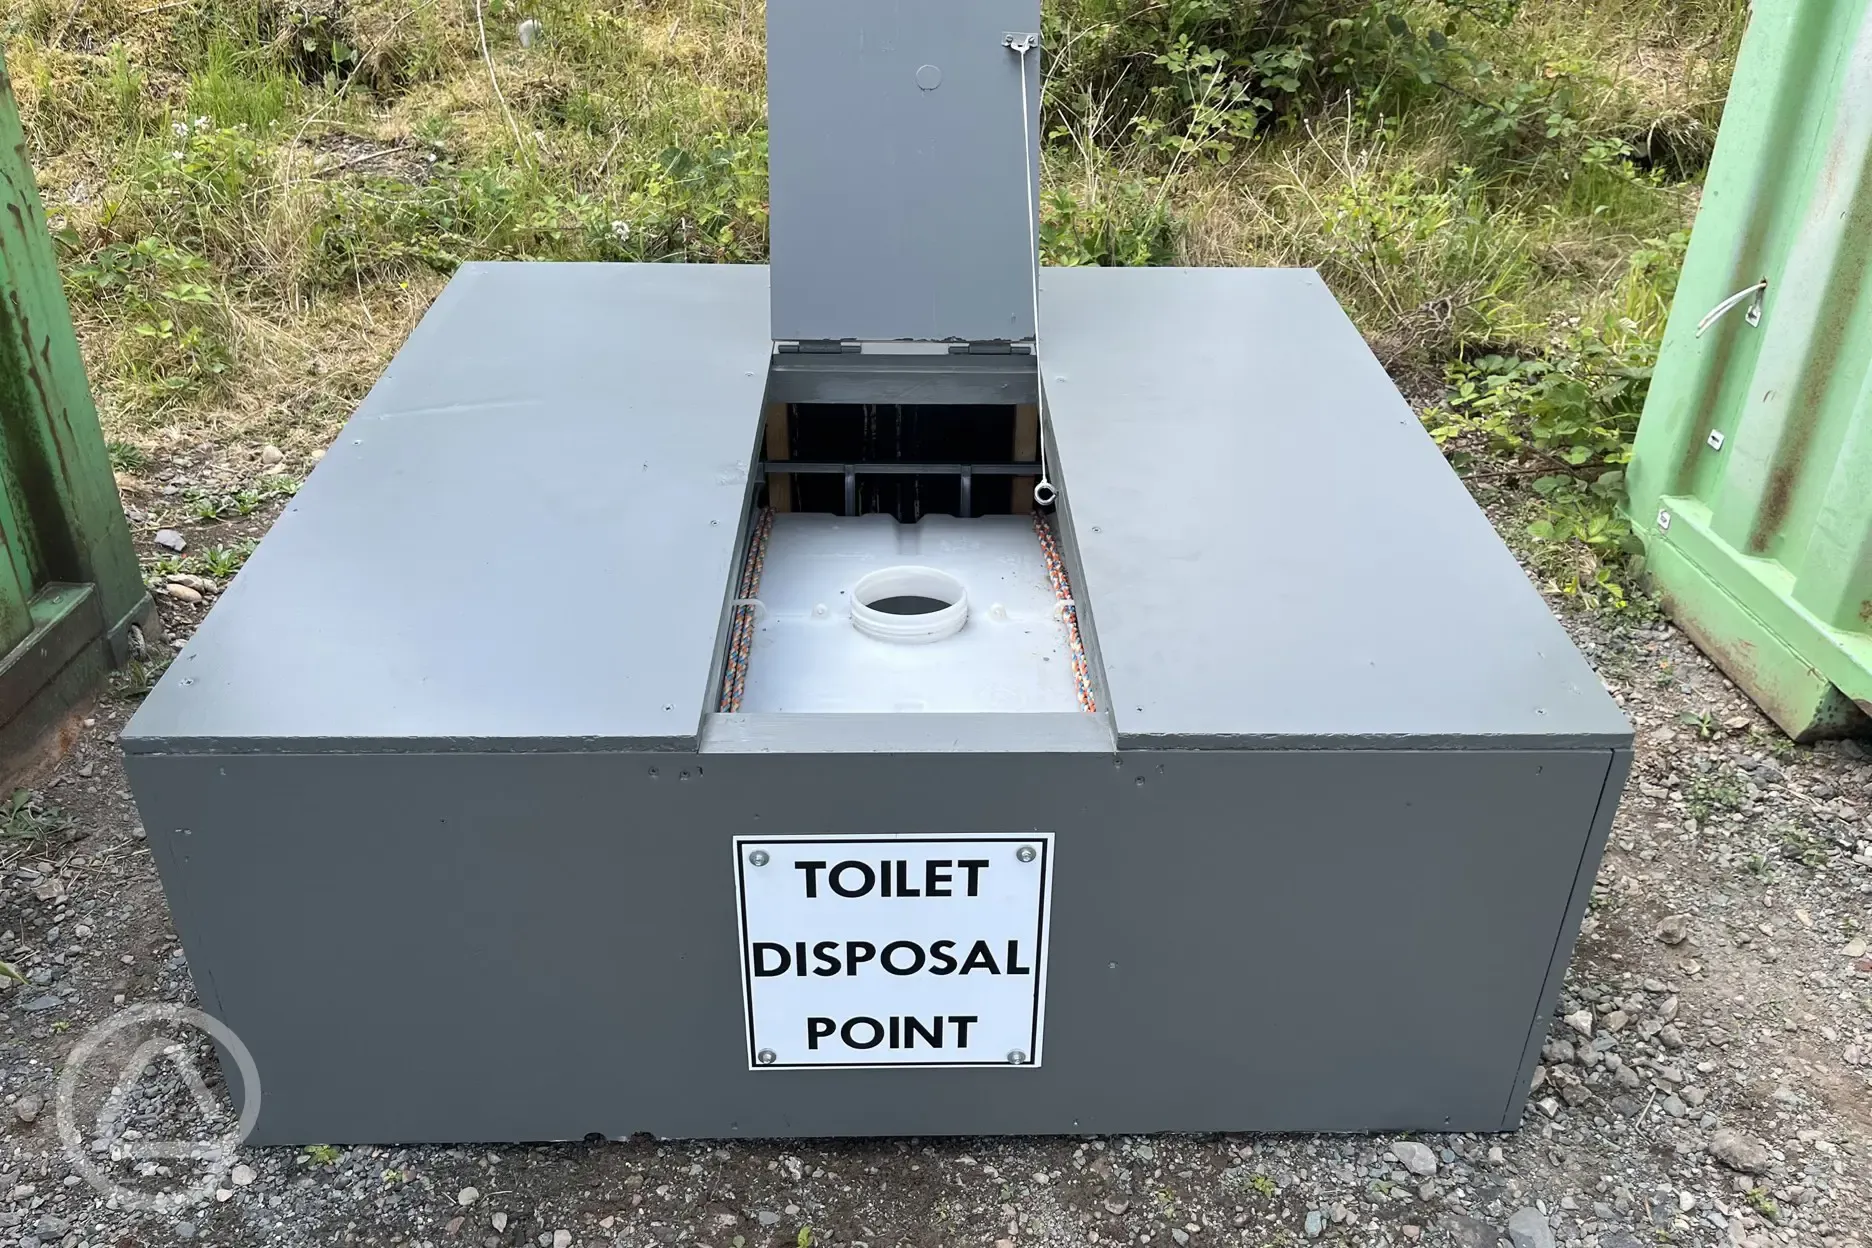 Disposal point